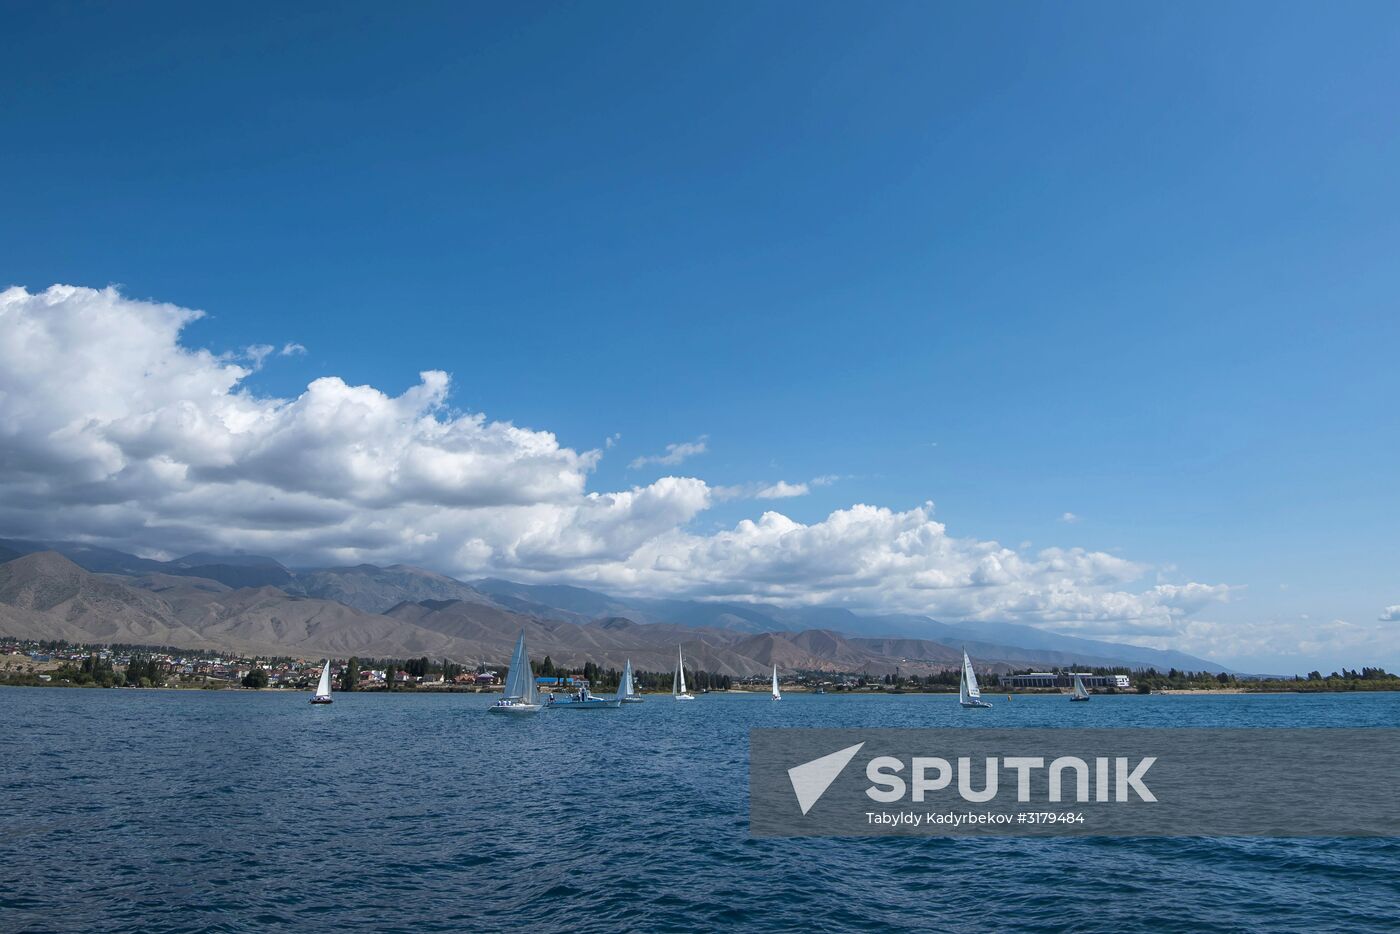 Sailing regatta on Lake Issyk-Kul in Kyrgyzstan